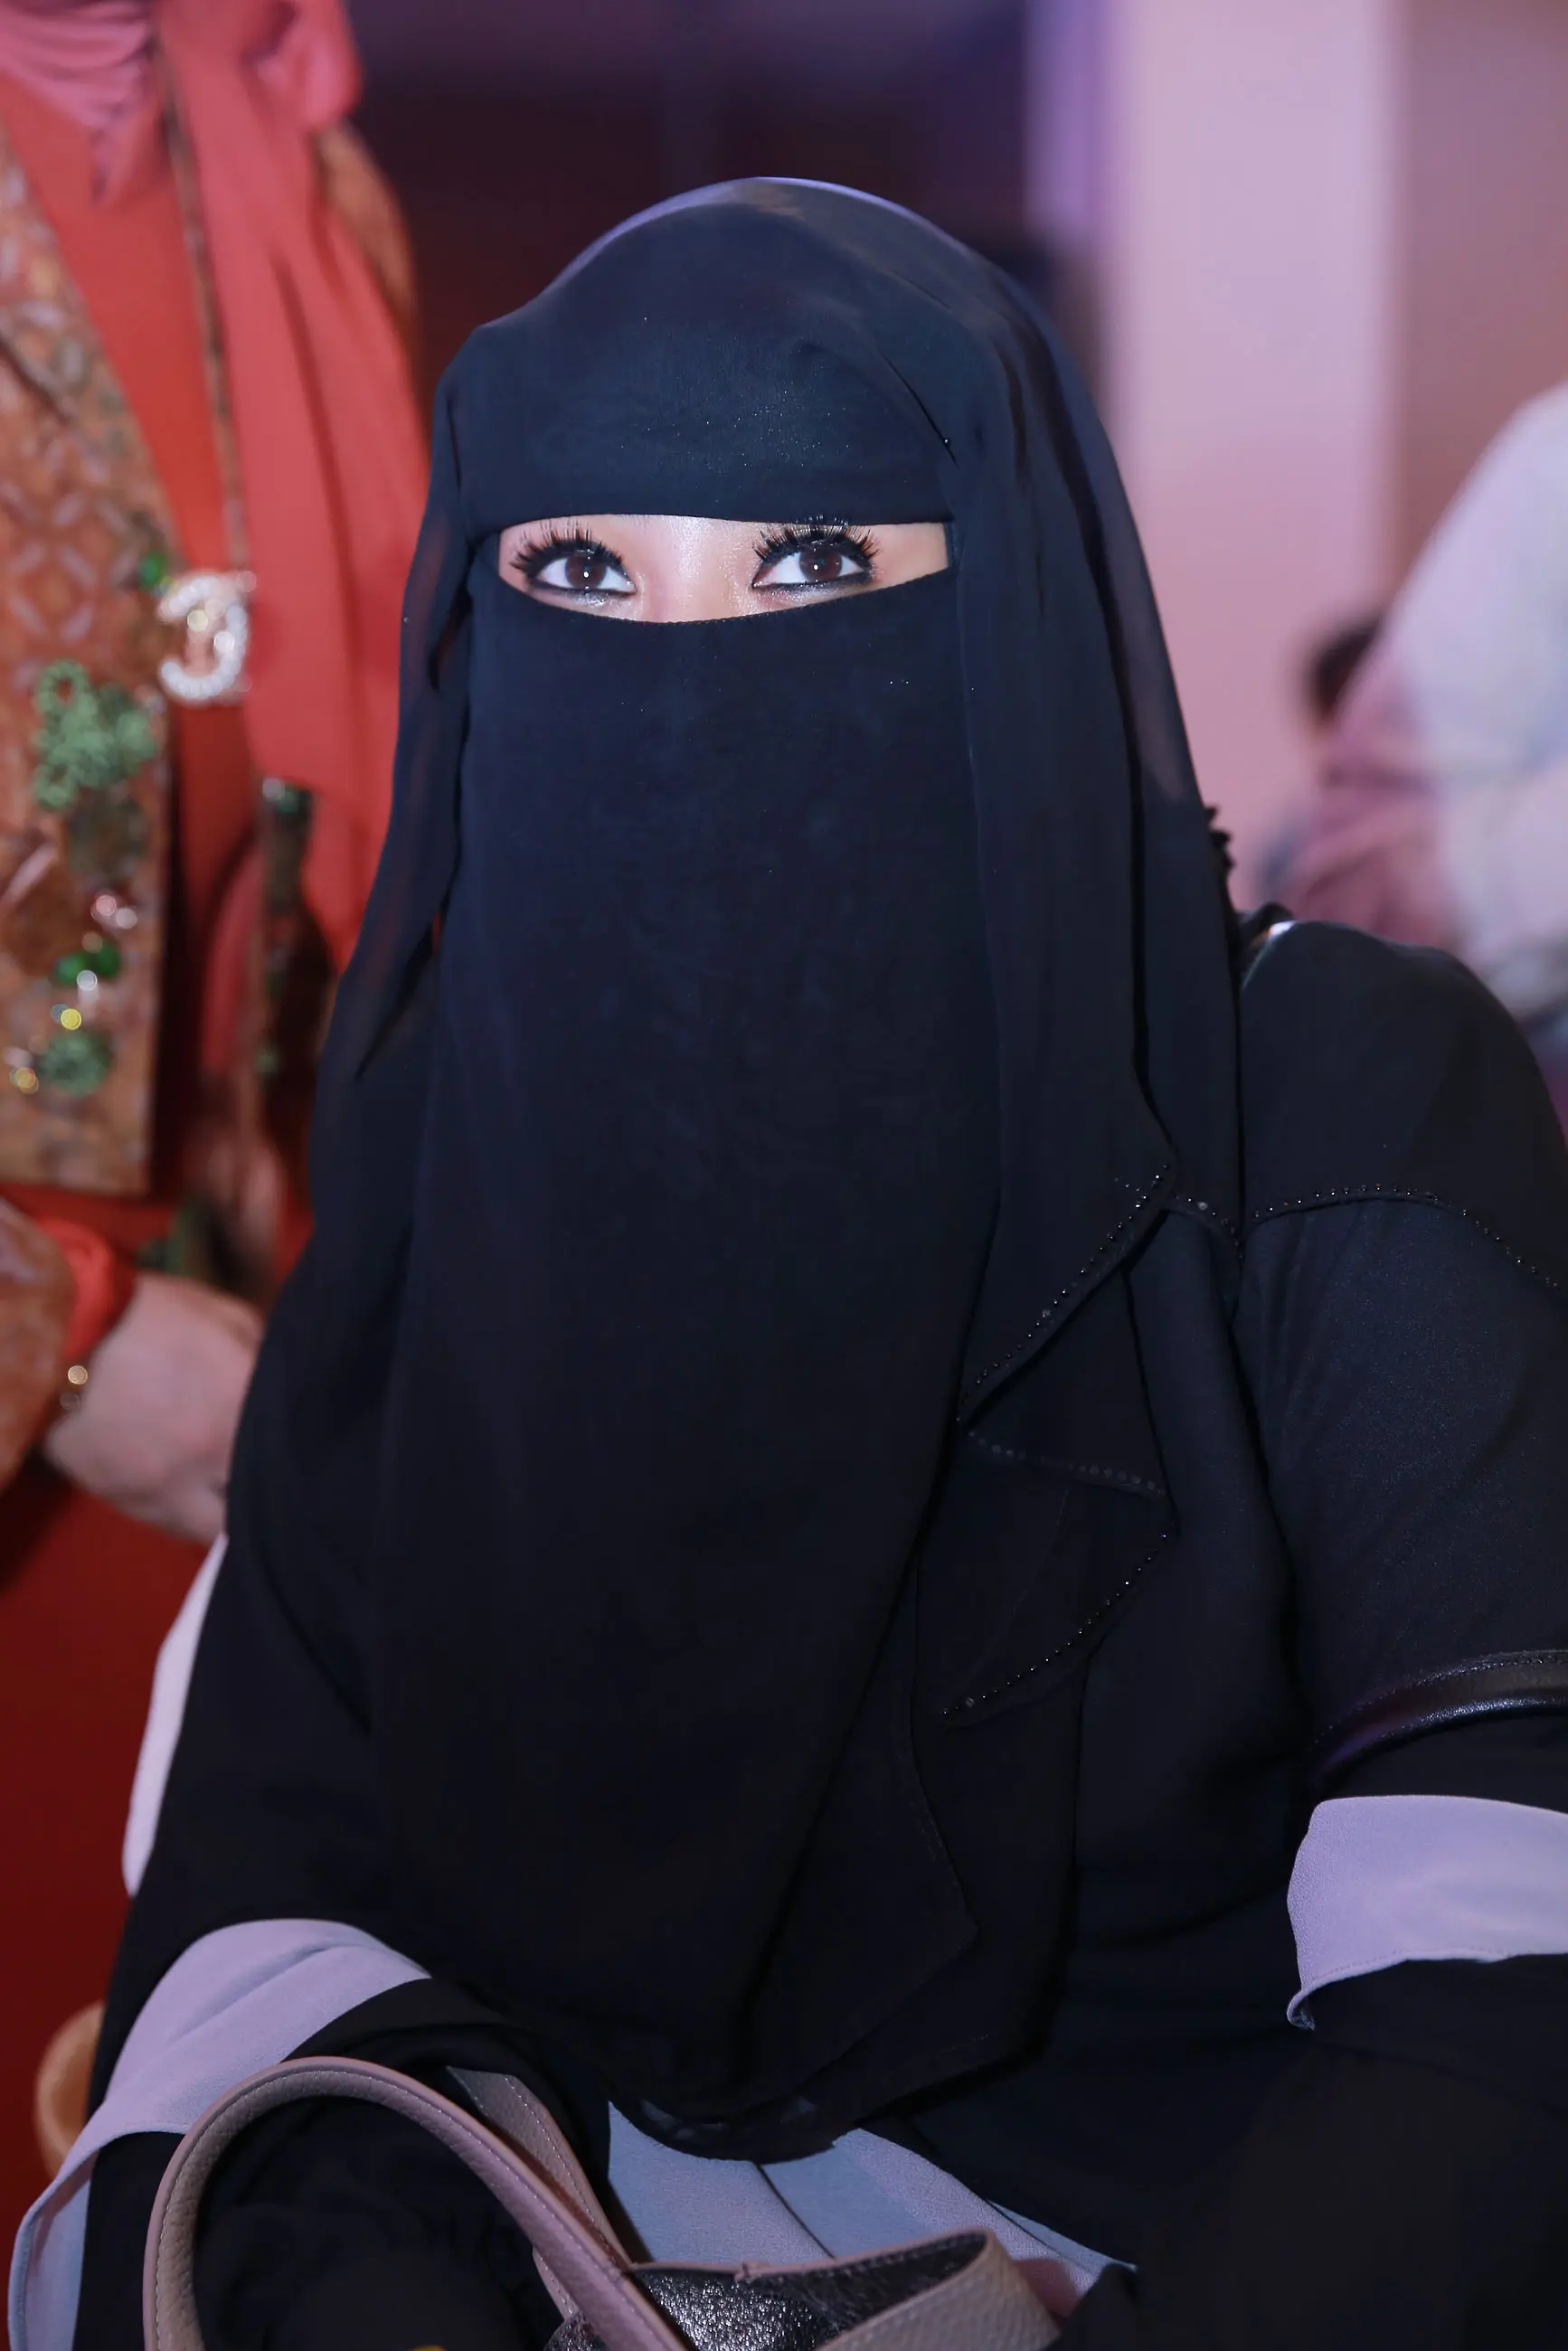 	Memang sebelum Soraya memakai cadar, ia mengenakan hijab yang membuat senyum manis dan hidung bangirnya masih bisa dilihat. Namun kini hanya bagian mata yang terlihat oleh public. (Galih W. Satria/Bintang.com)